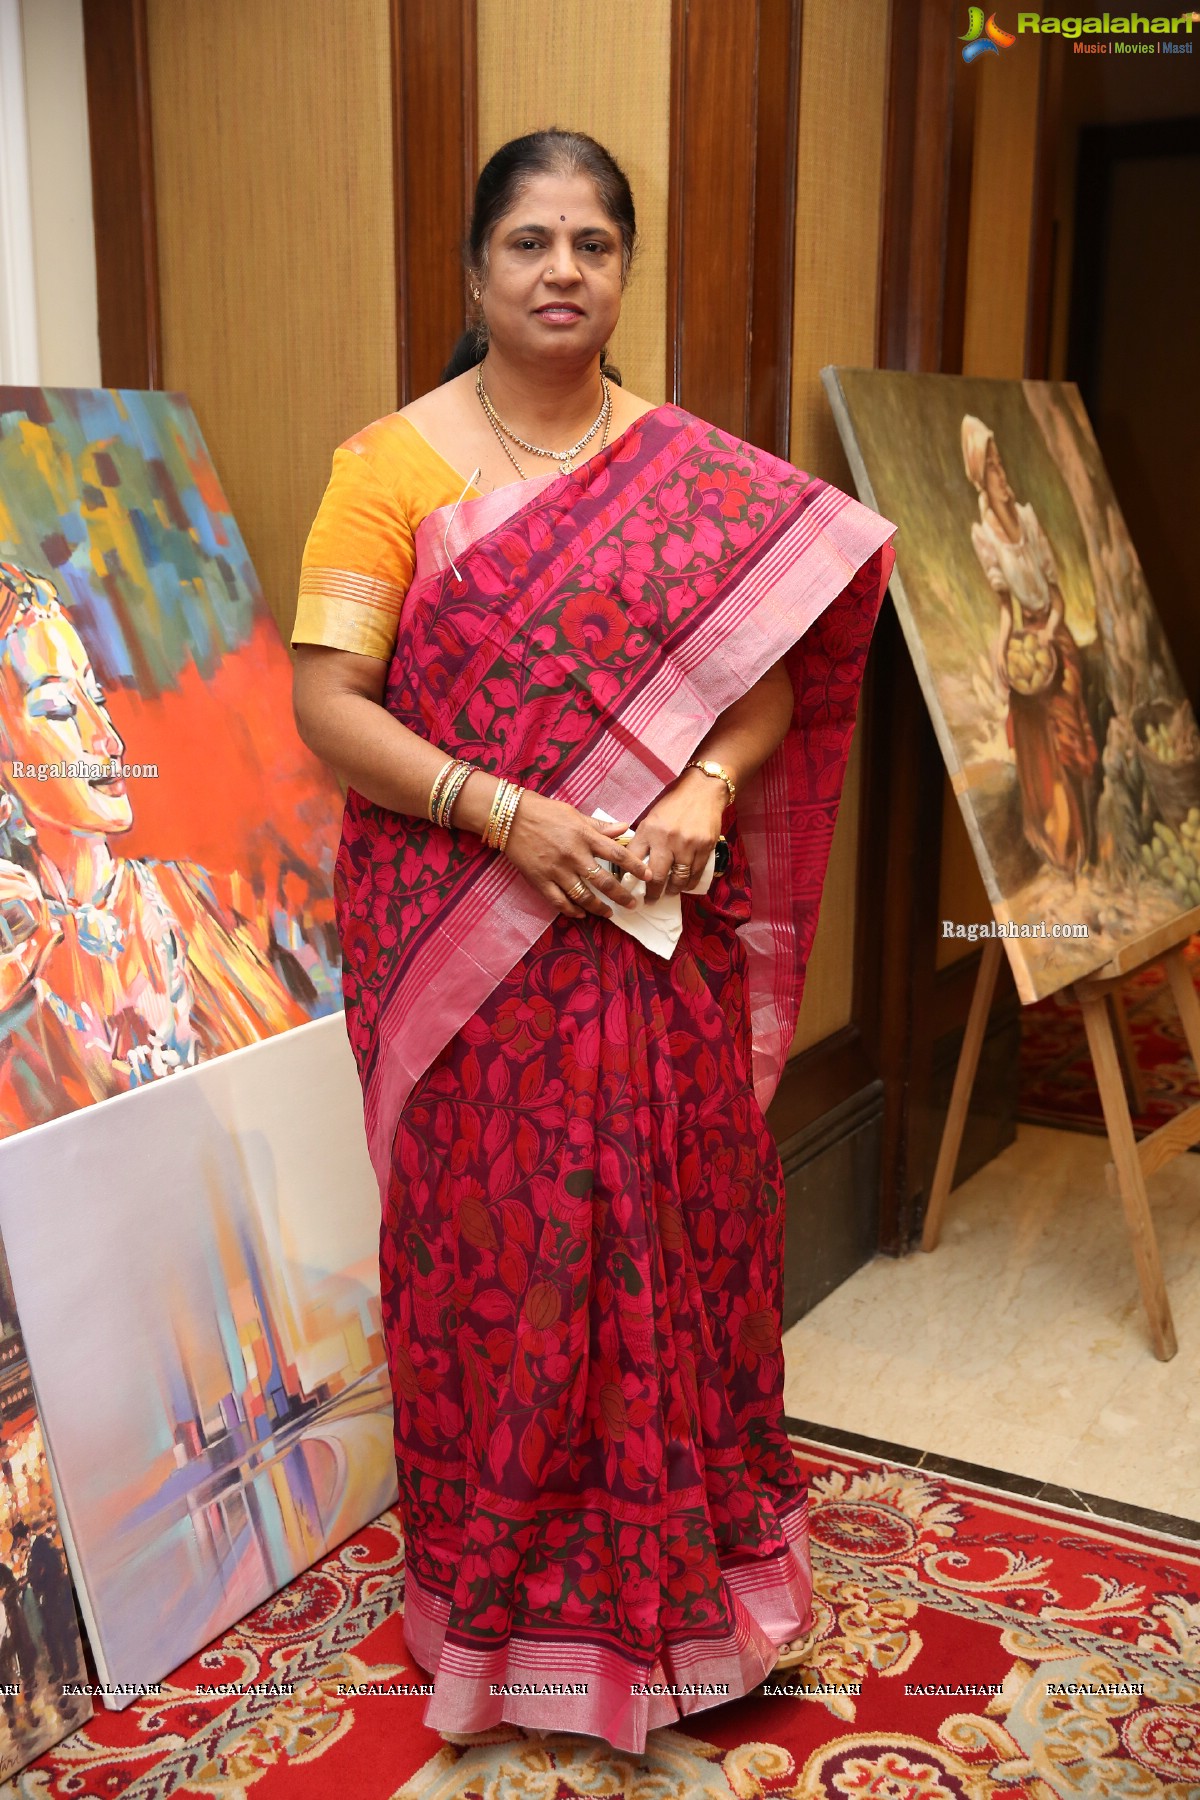 Episode Art Exhibition by Hari at Taj Krishna, Hyderabad